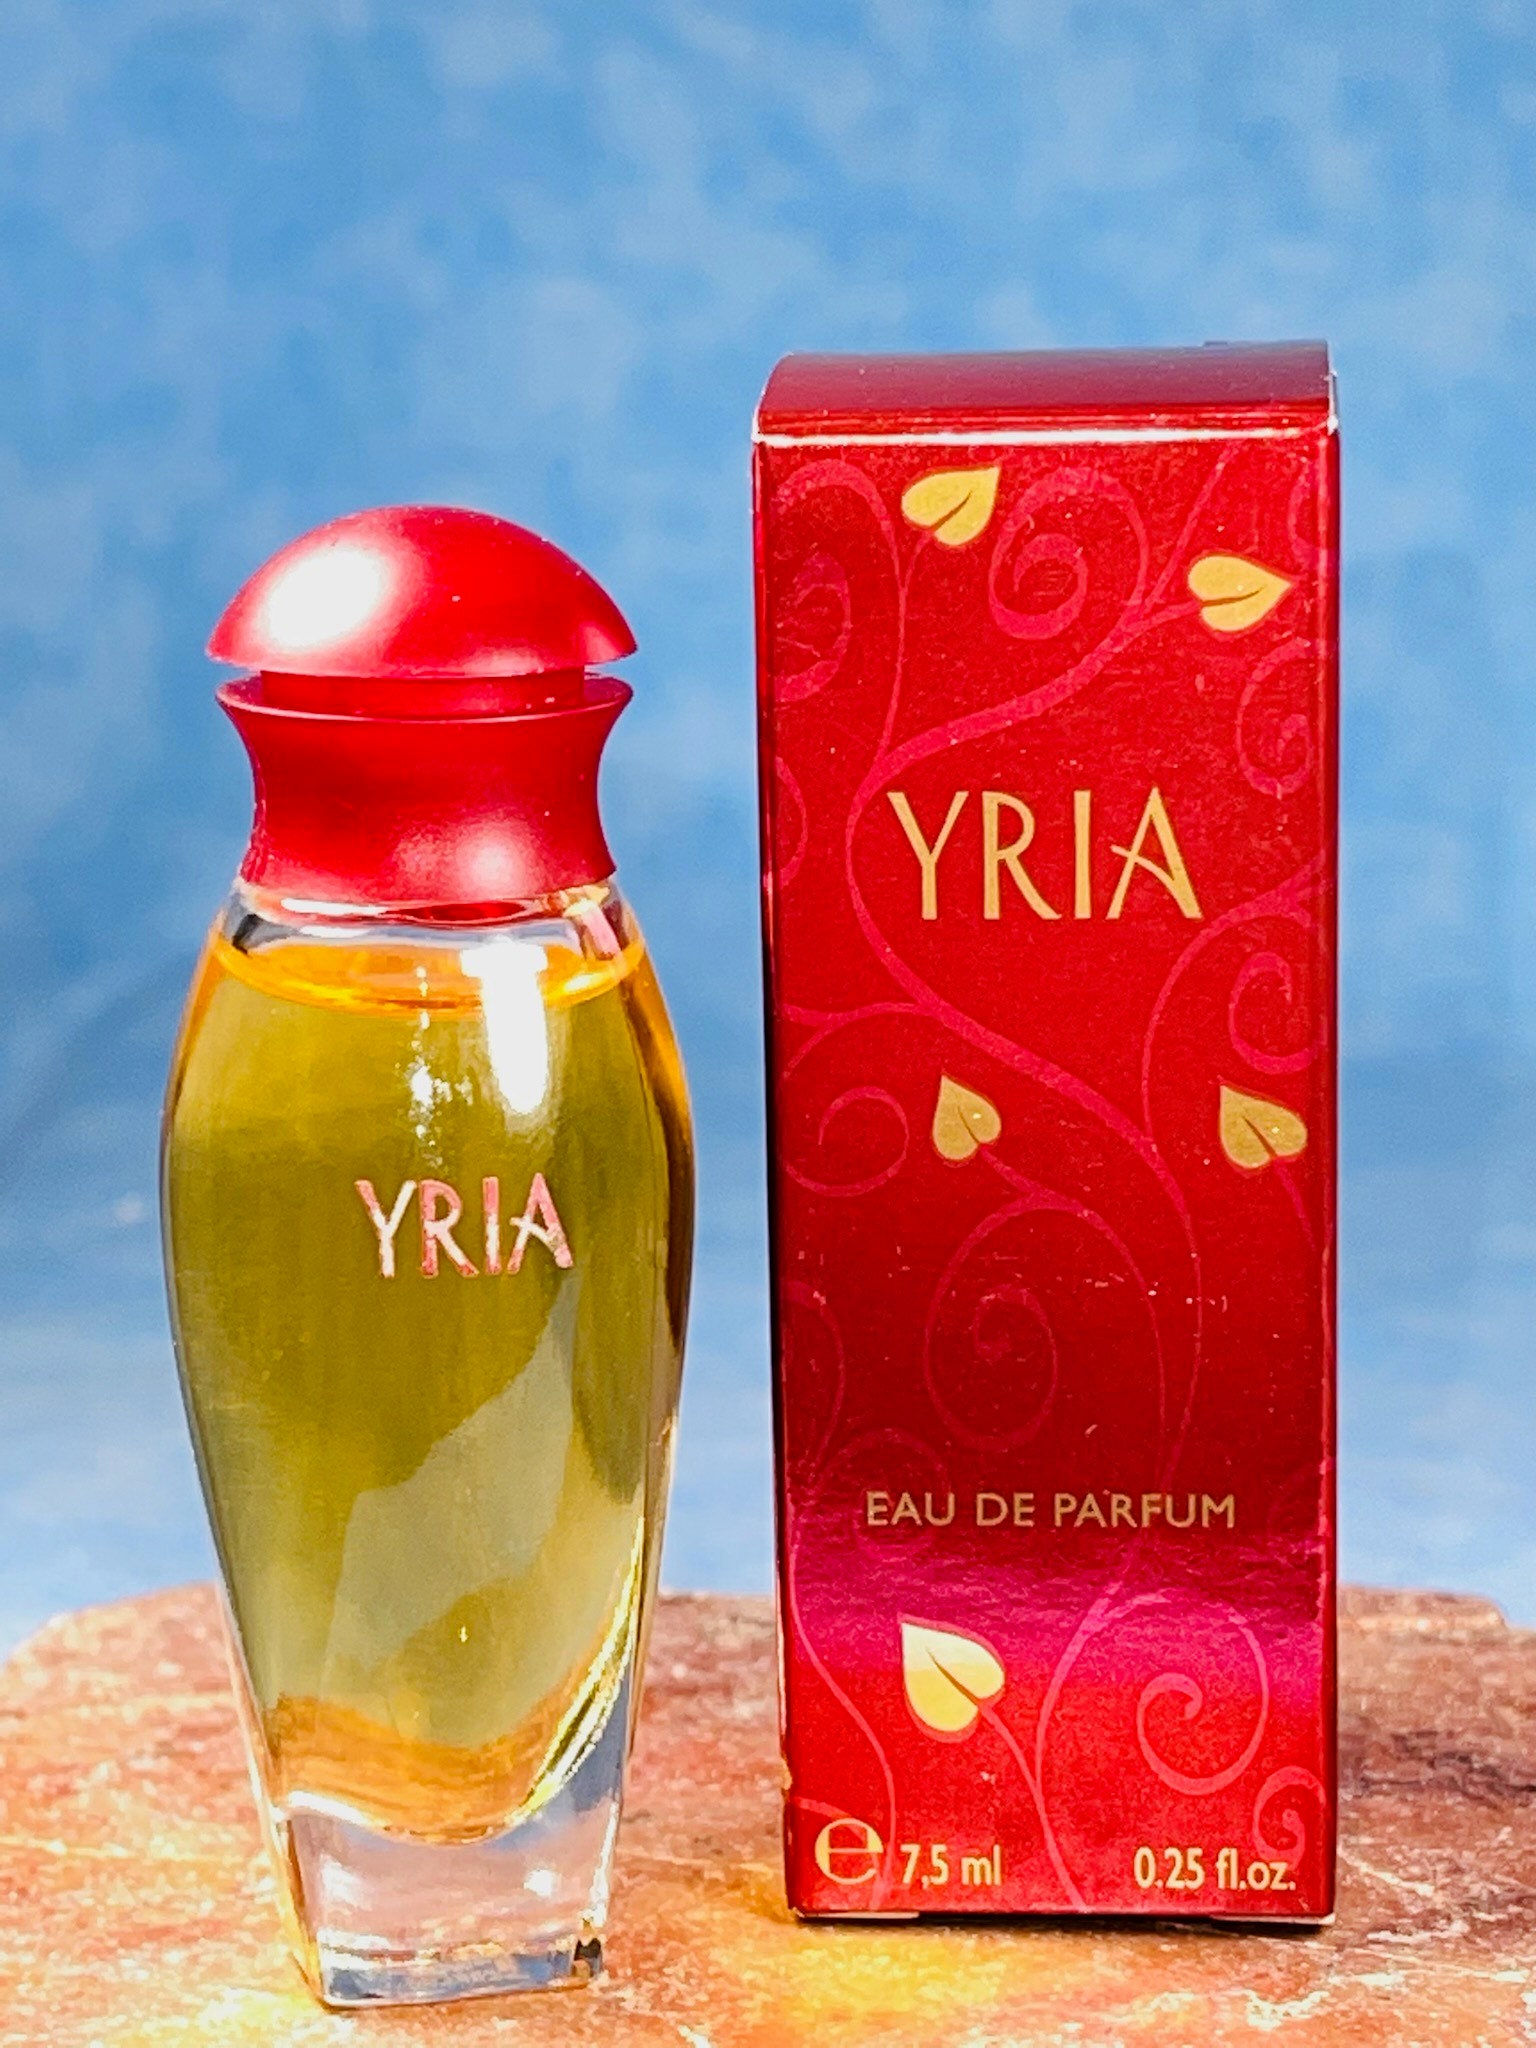 YVES SAINT LAURENT LIBRE Le Parfum EDP MINI 0.25oz, 7.5ml New in